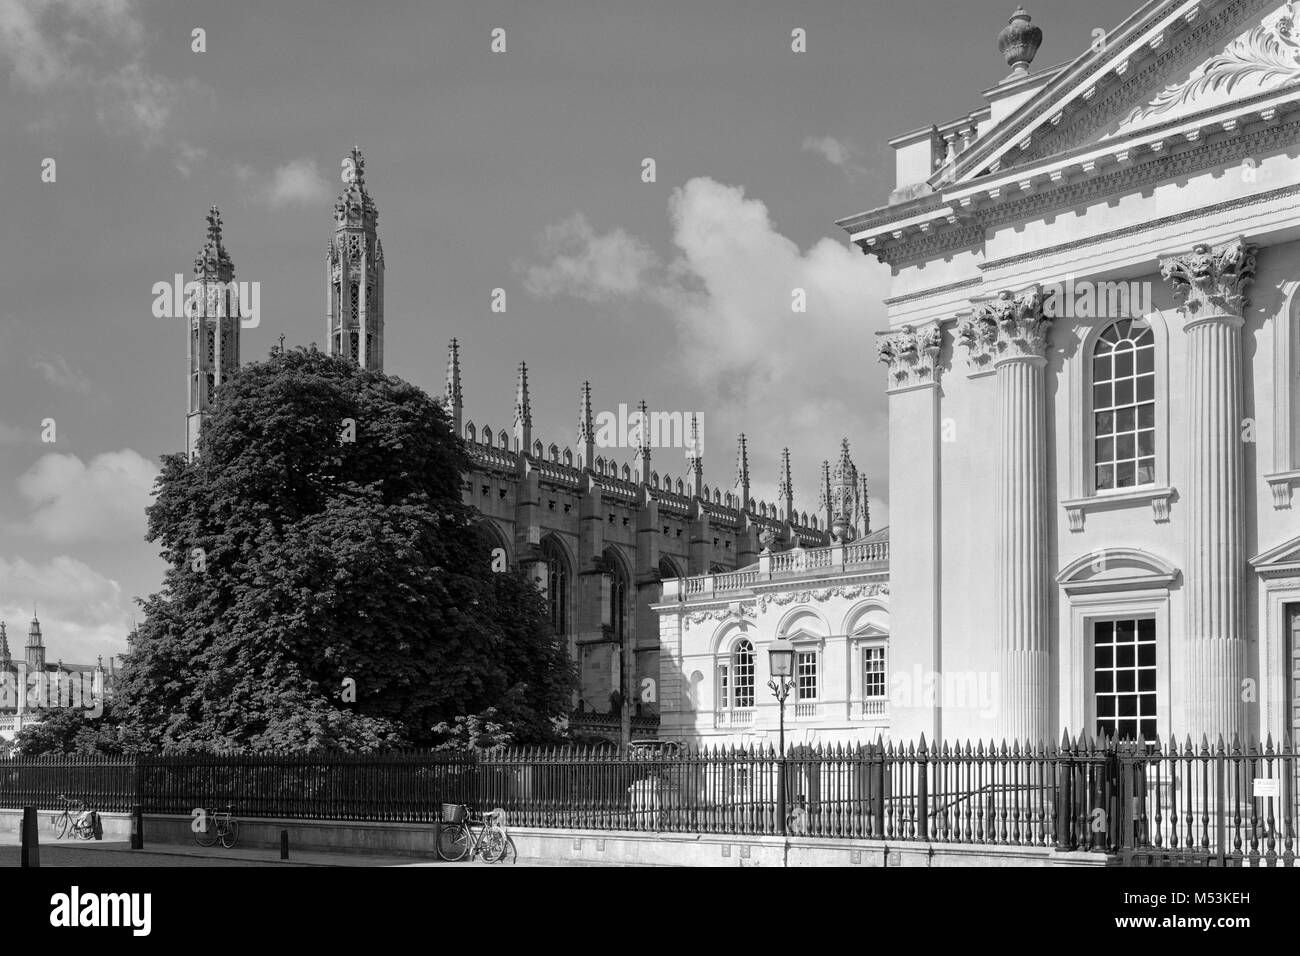 Senate House, Old Schools and King's College Chapel of Cambridge University Stock Photo